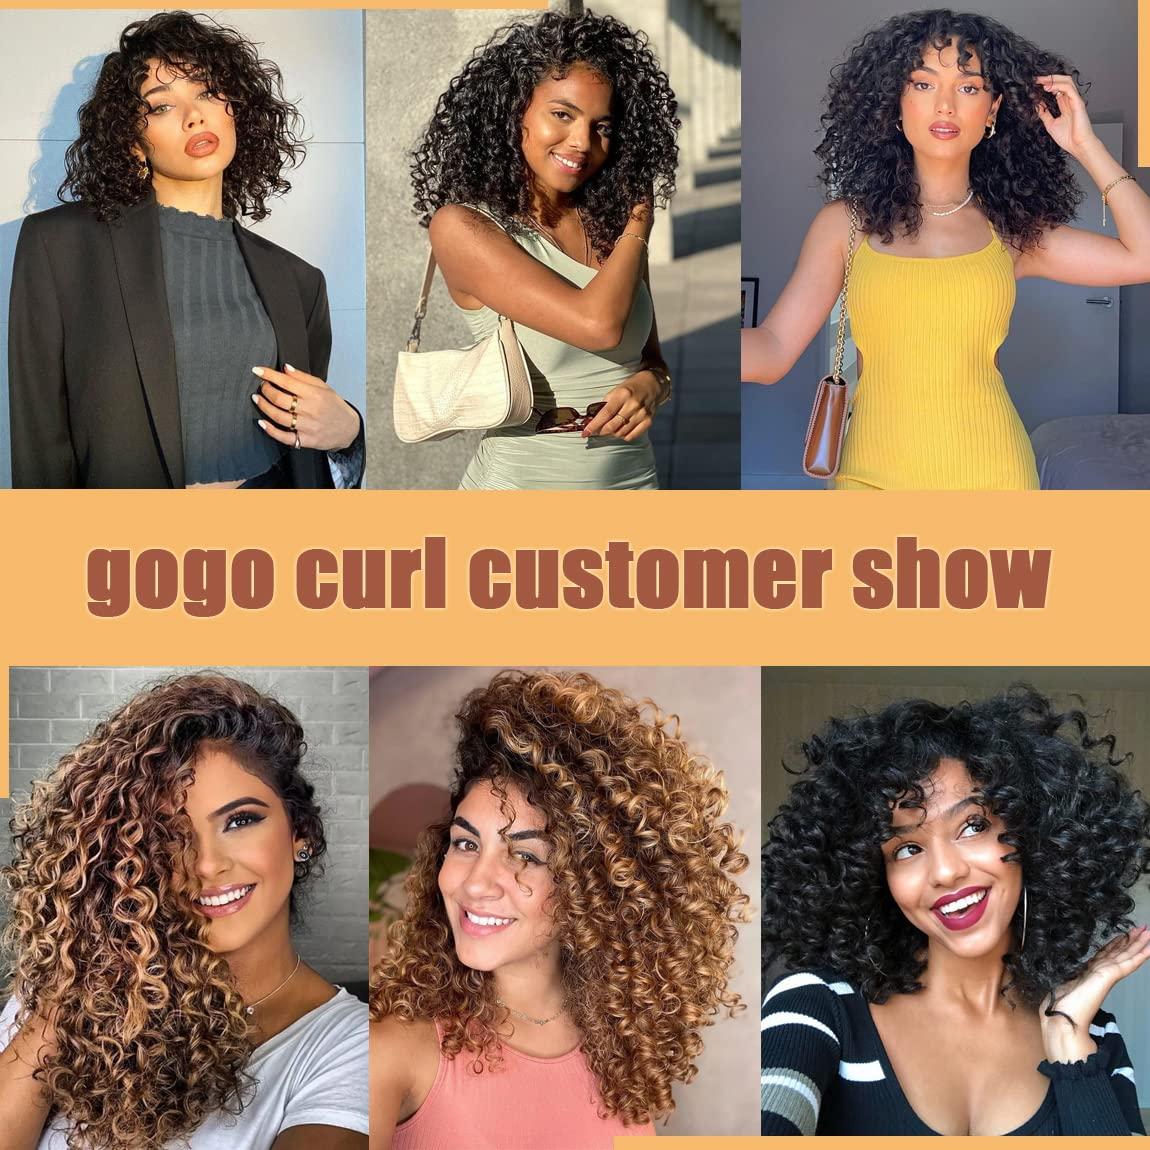 Crochet Hair 12 Inch 8 Packs Gogo Curl Curly Crochet Hair Beach Curl Crochet  Hair Extensions Ocean Wave Crochet Hair For Black Women(12 inch 8 packs 1B)  12 Inch (Pack of 8) 1B